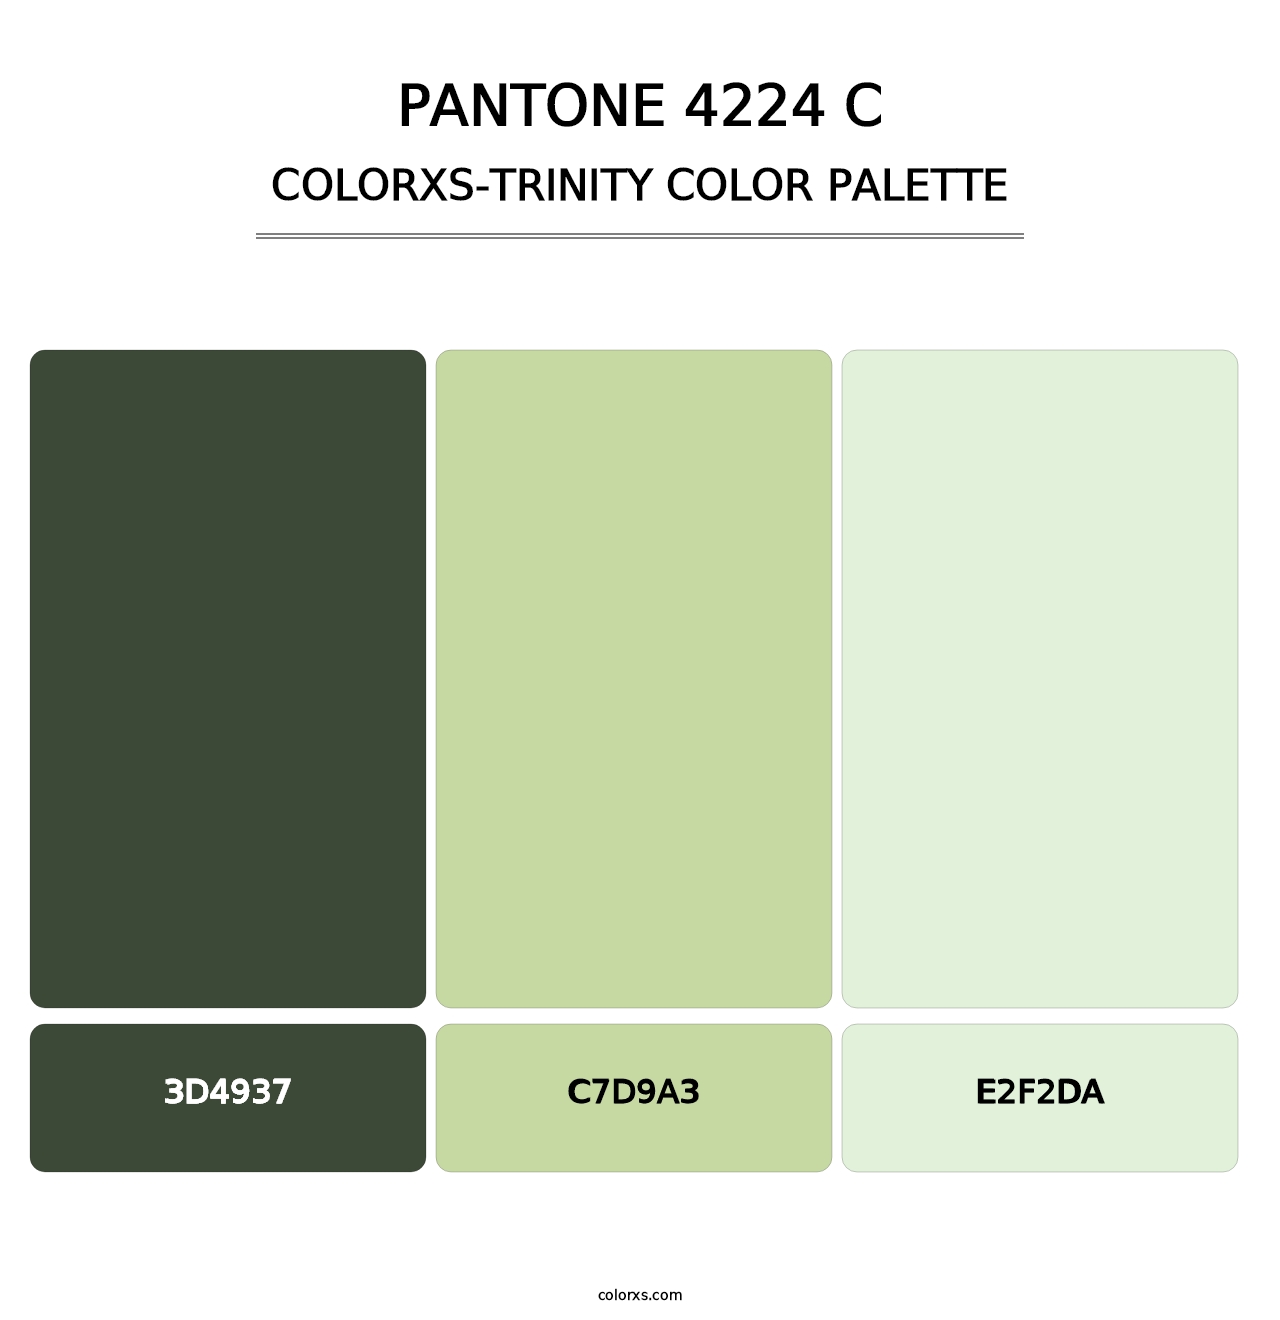 PANTONE 4224 C - Colorxs Trinity Palette